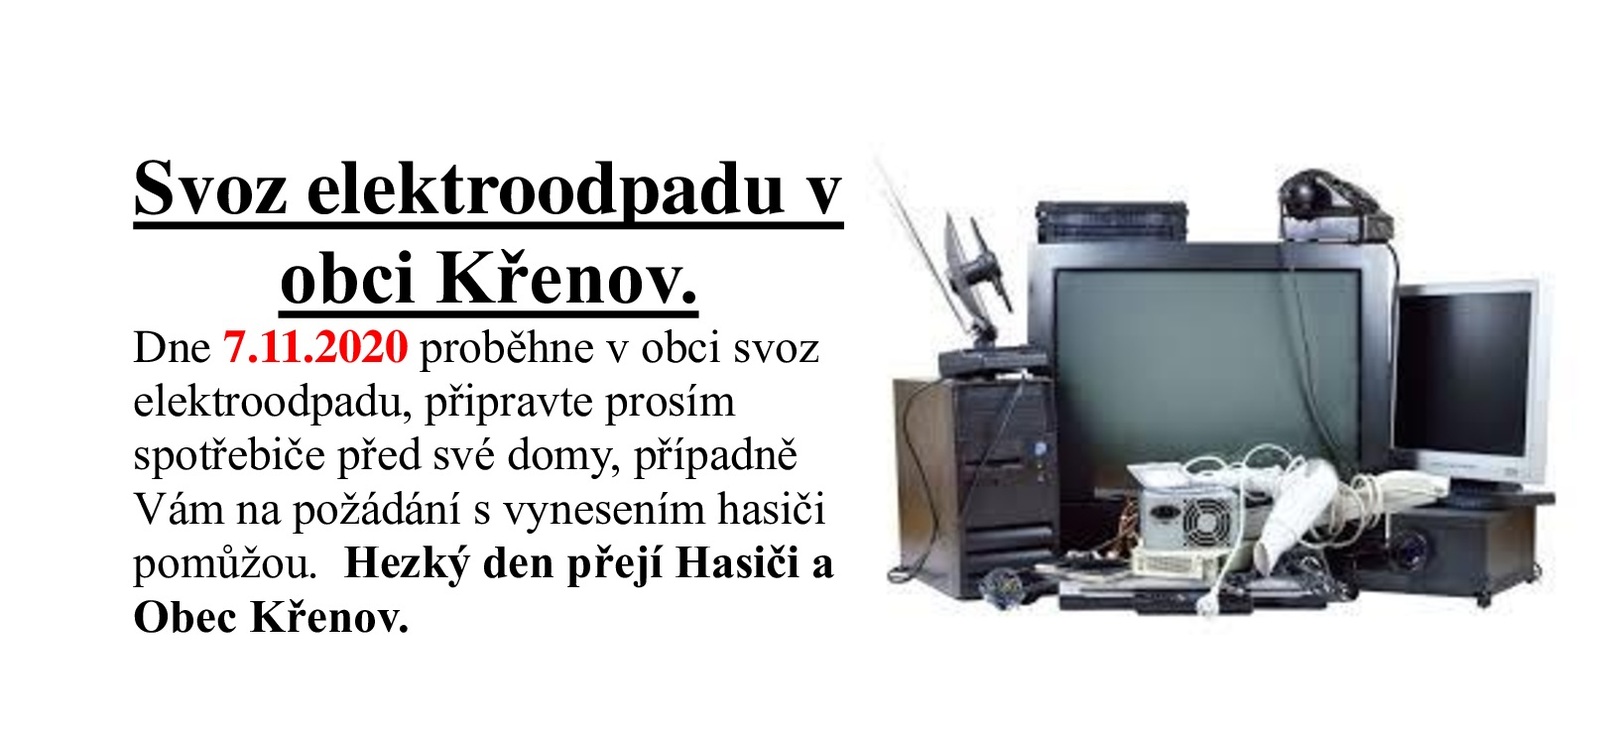 Svoz elektroodpadu v obci Křenov.